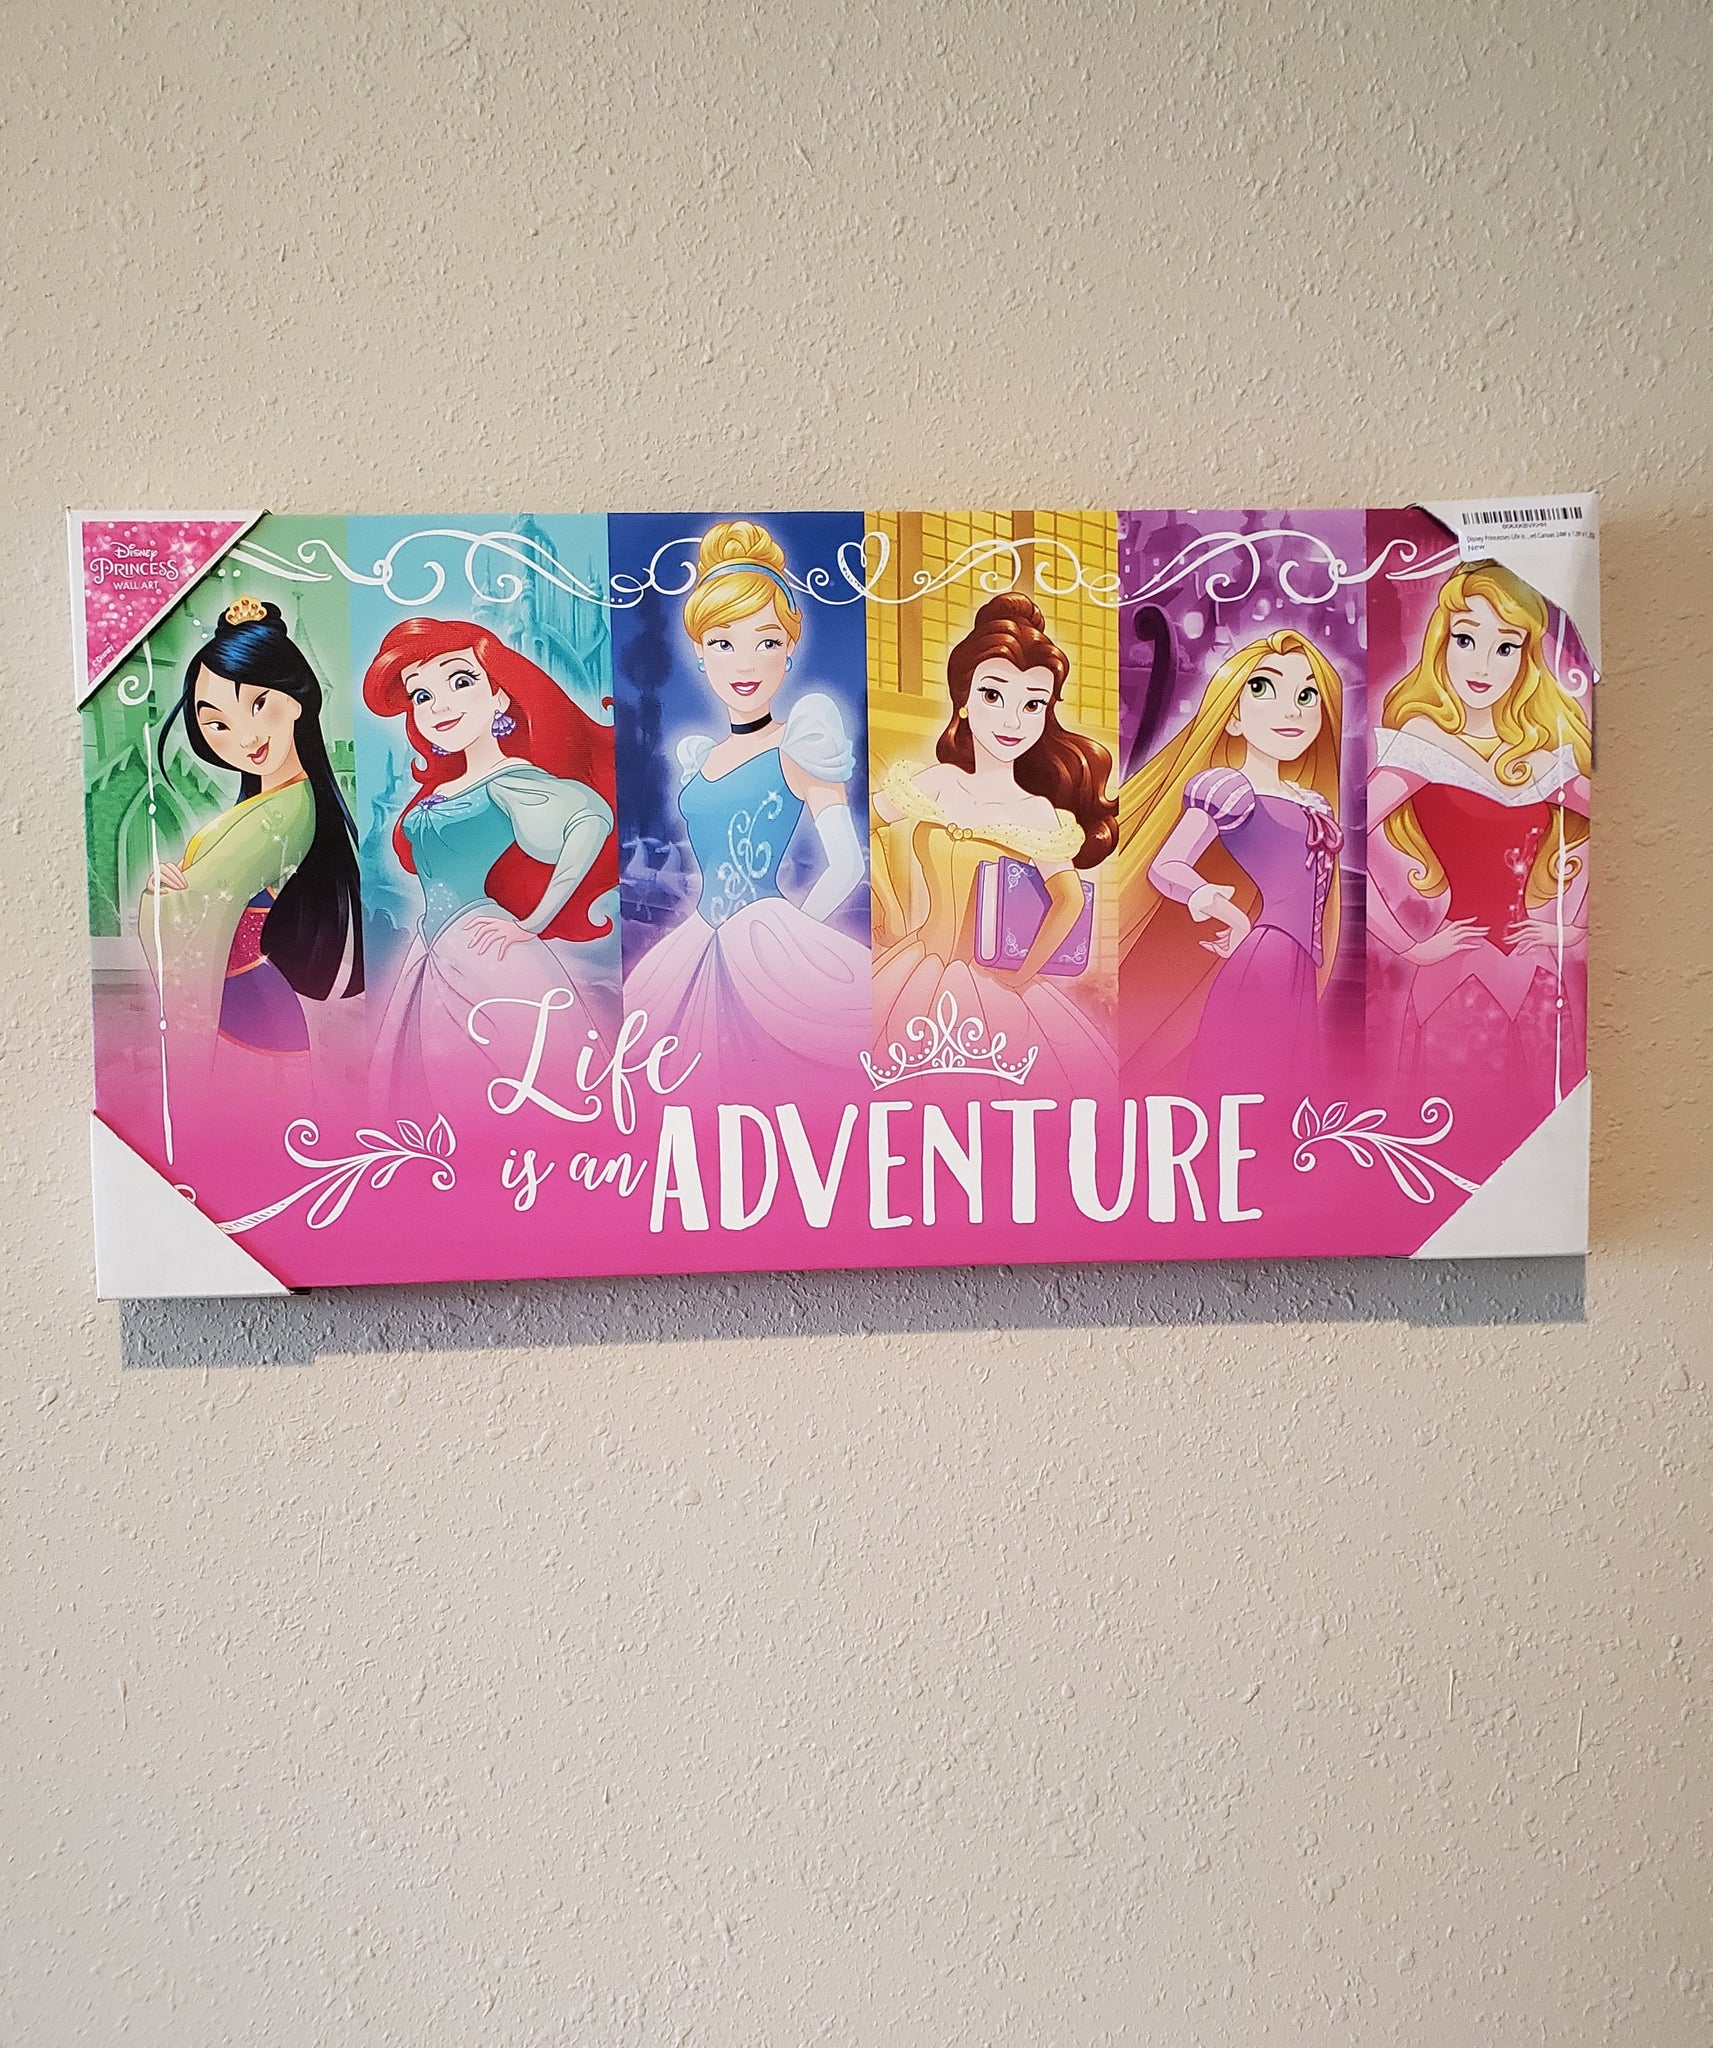 Disney Princess Canvas Print